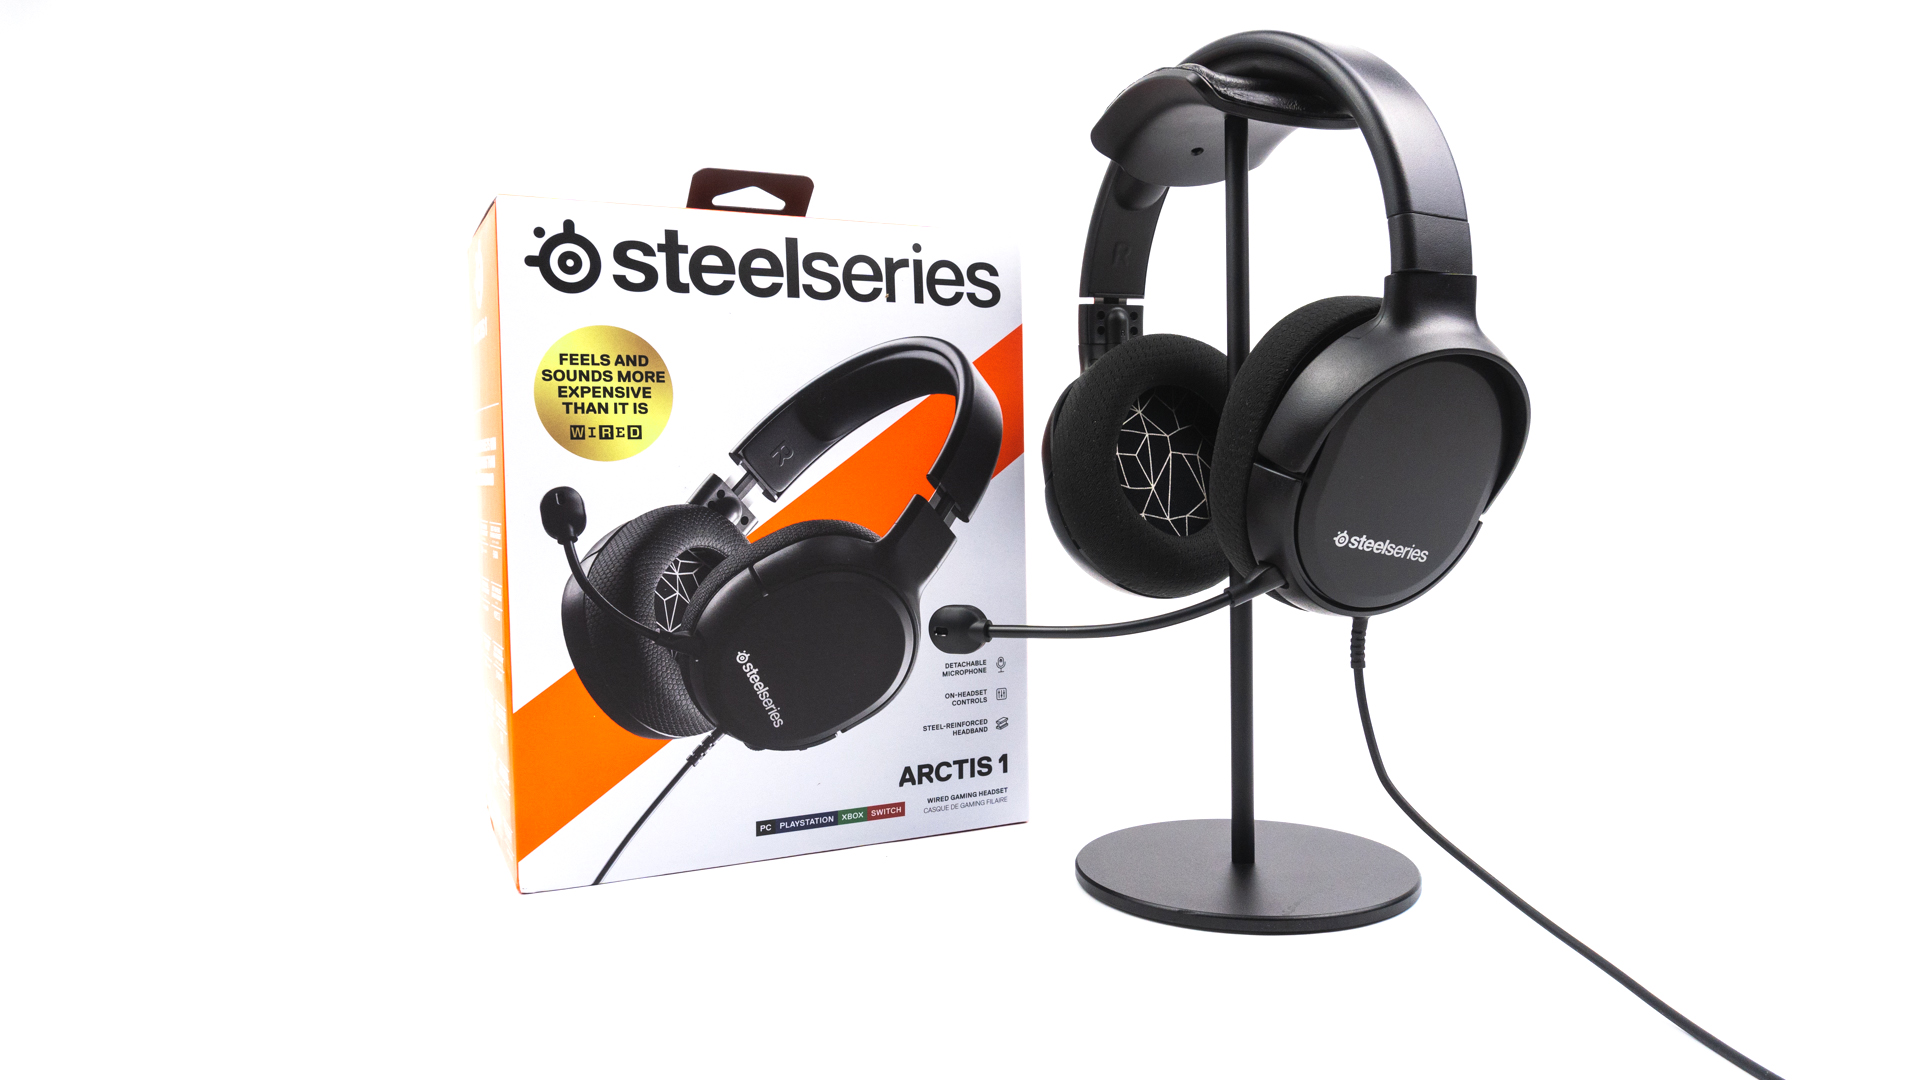 The Steelseries Arctis 1 Headphones